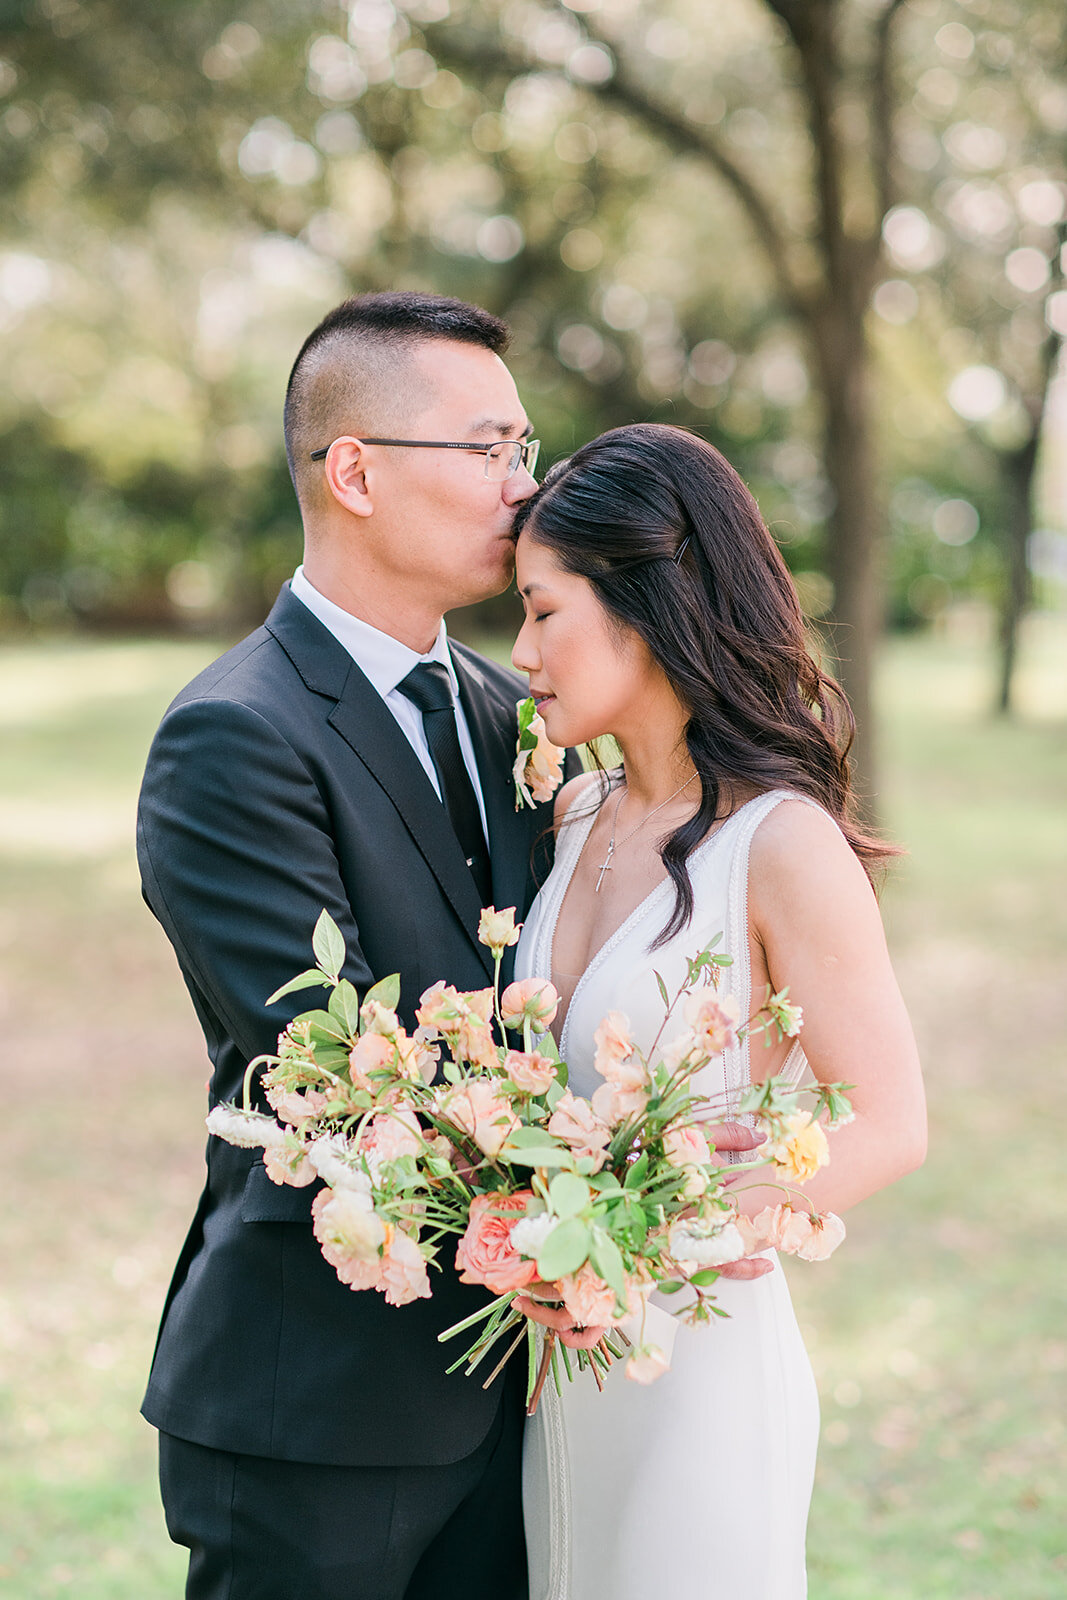 bride-groom-garden-style-peach-blush-ivory-bouquet-blush-floral-co-houston-texas-florist-kaiti-moyers-photography